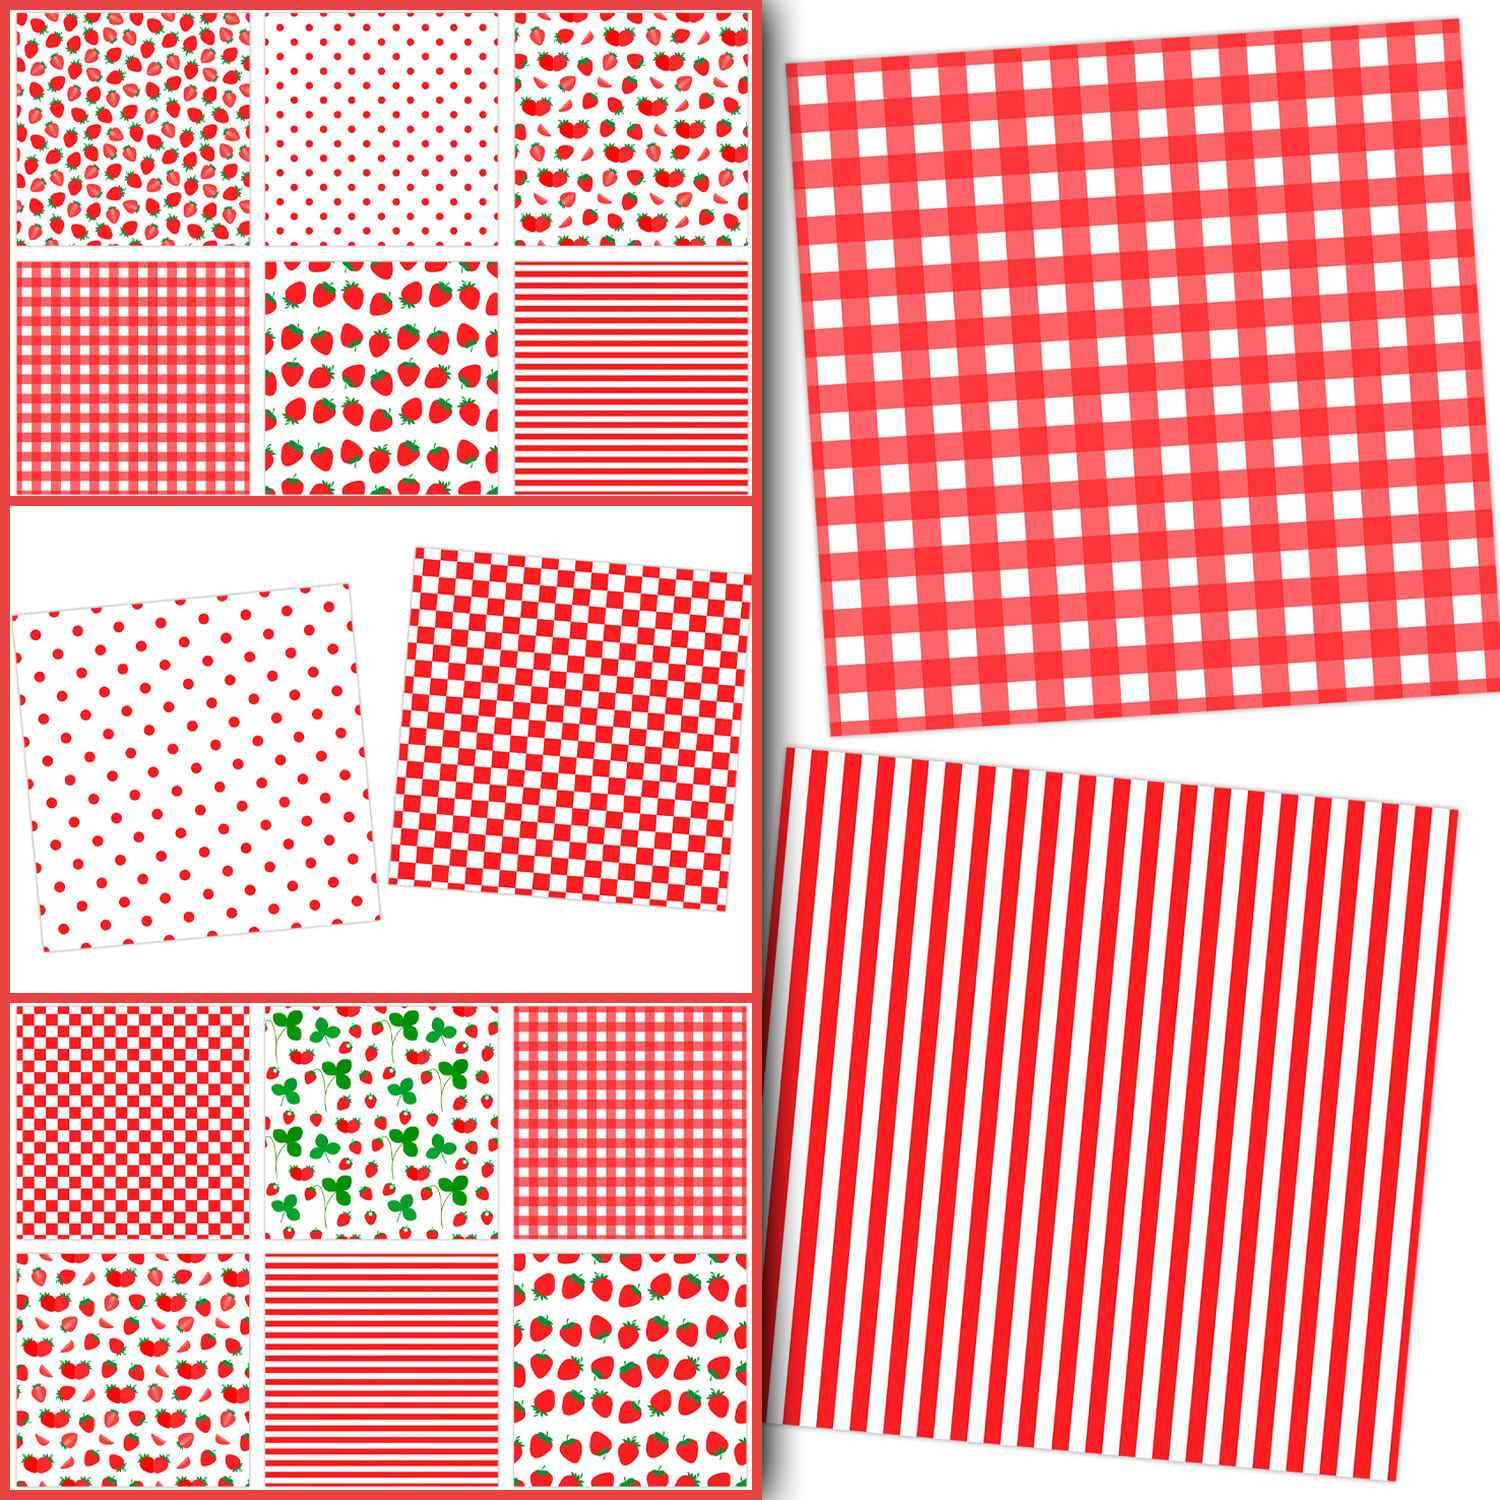 Strawberry Seamless Pattern Created By IrinaShishkova.